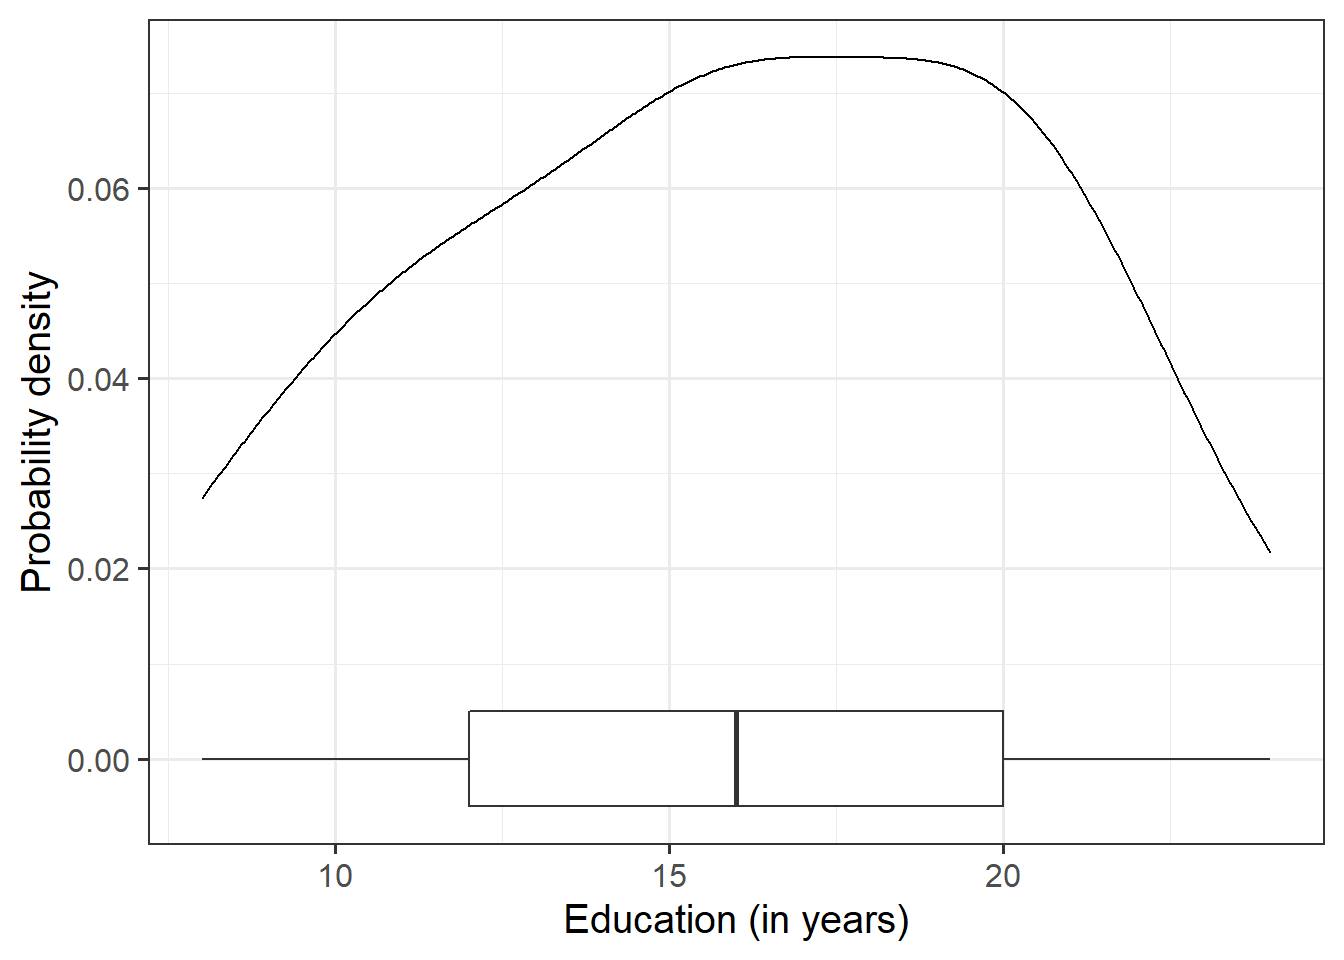 Density plot and boxplot of employee education levels.